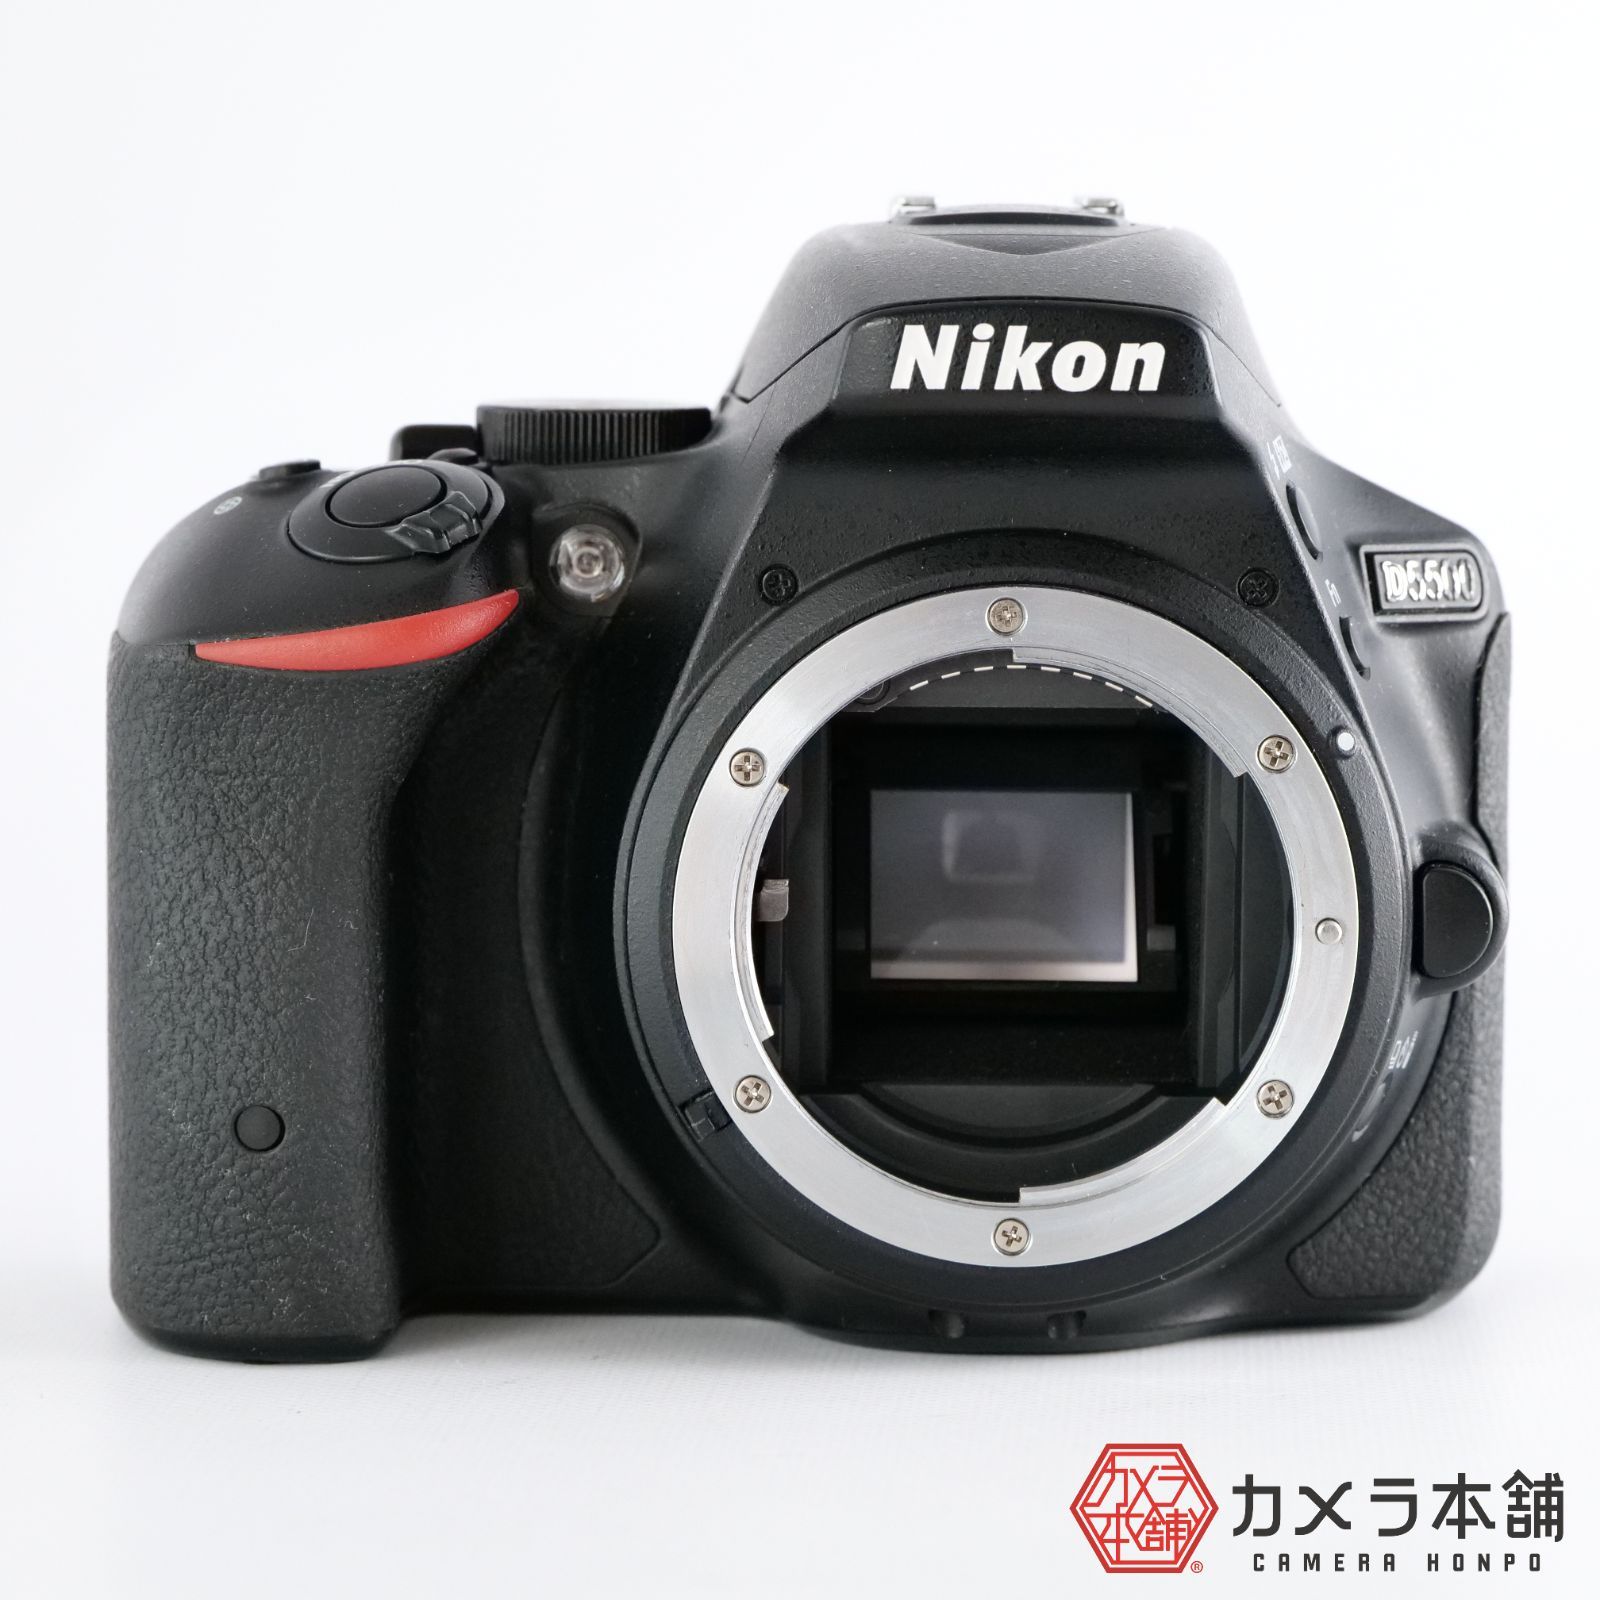 Nikon ニコン デジタル一眼レフカメラ D5500 ボディ ブラック カメラ本舗｜Camera honpo メルカリ